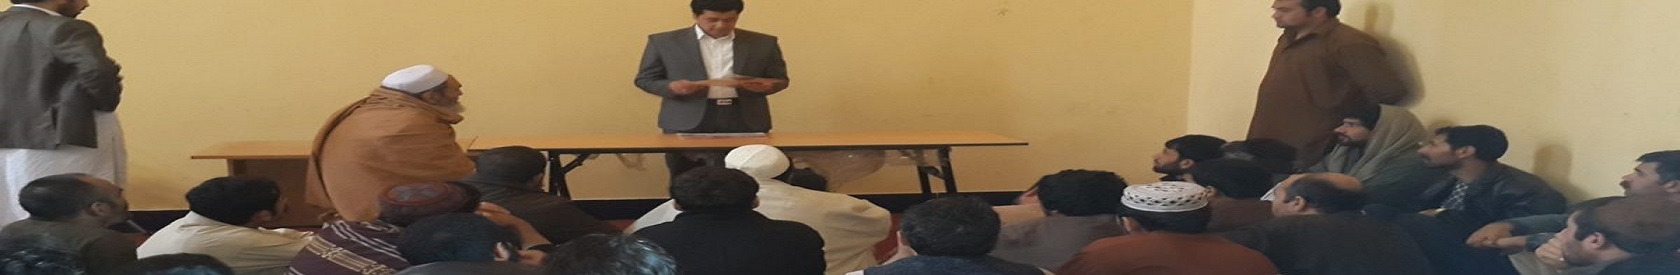 Awareness training program in Herat’s men jail